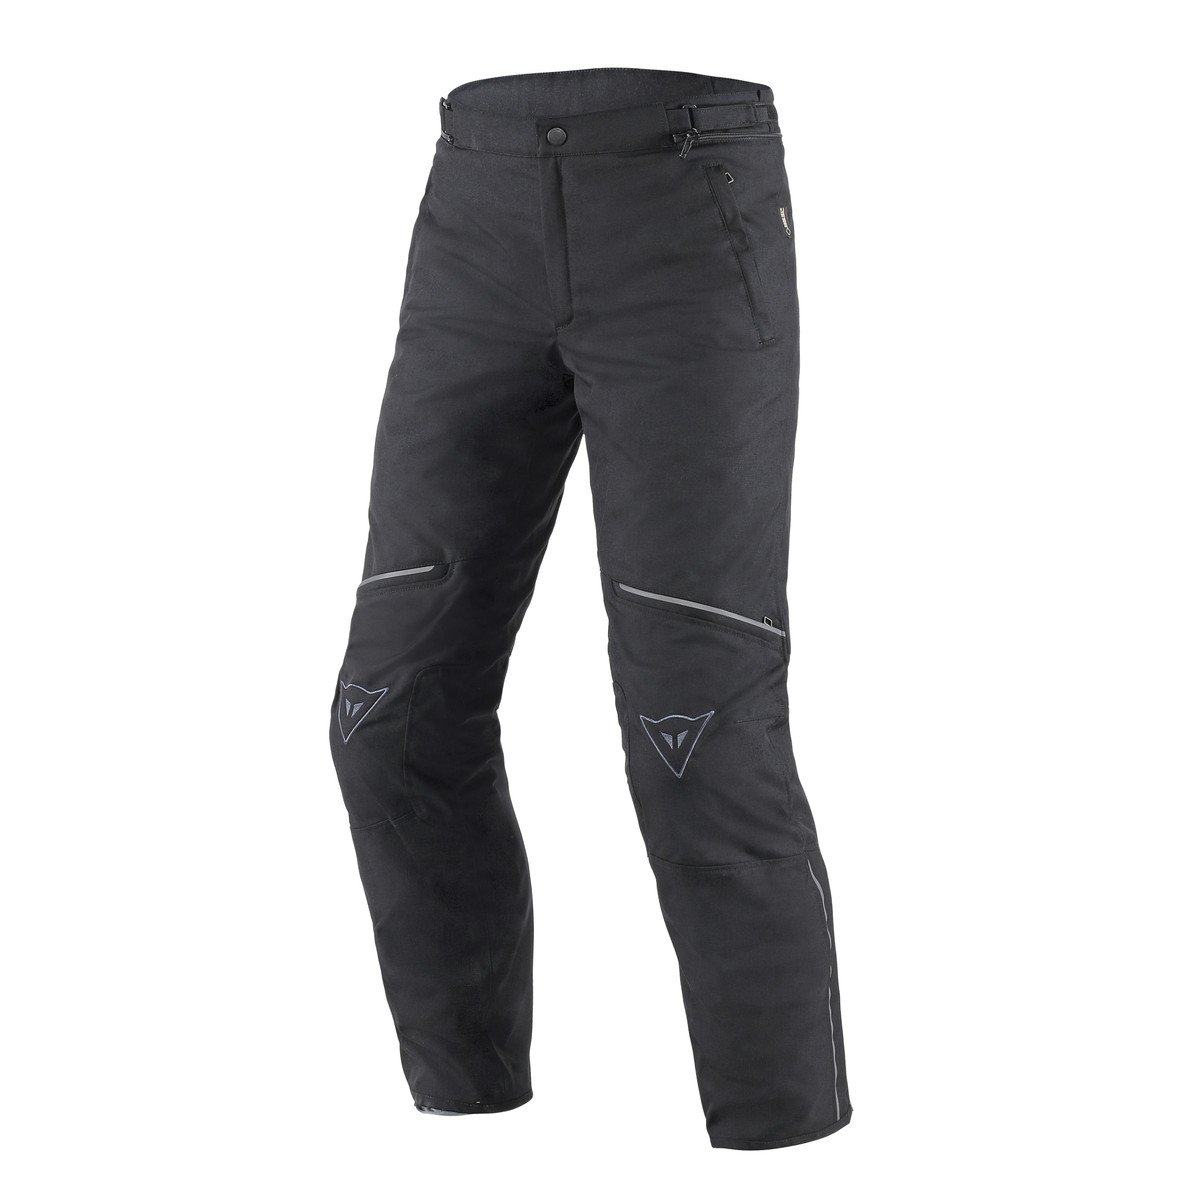 Dainese New Galvestone D2 GTX Black Textile Motorcycle Pants 44